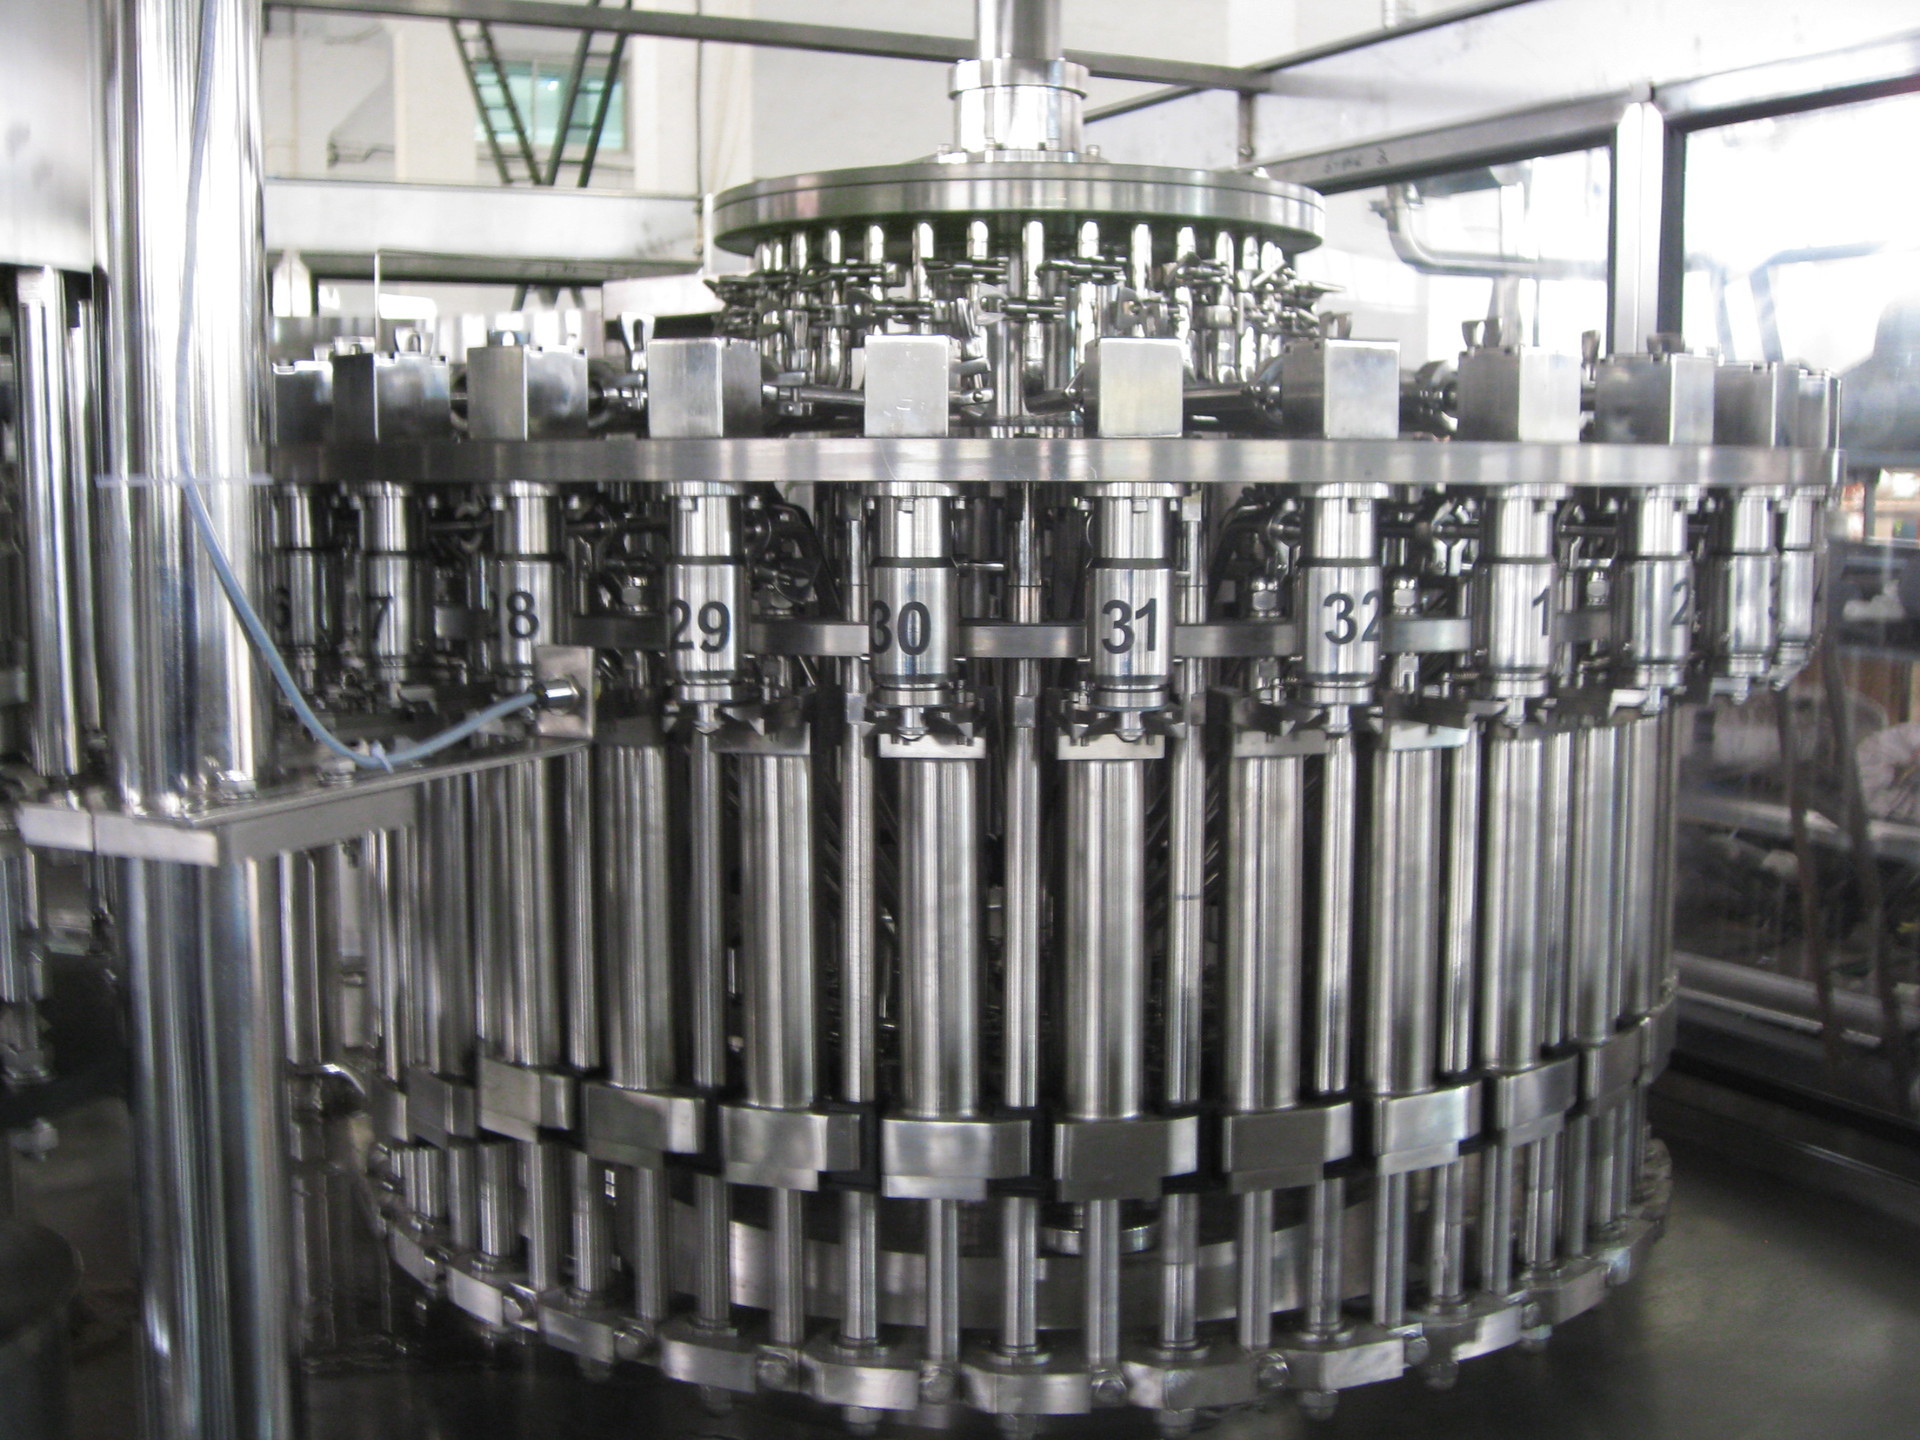 pp52 powder pressing machine - tecnicoll